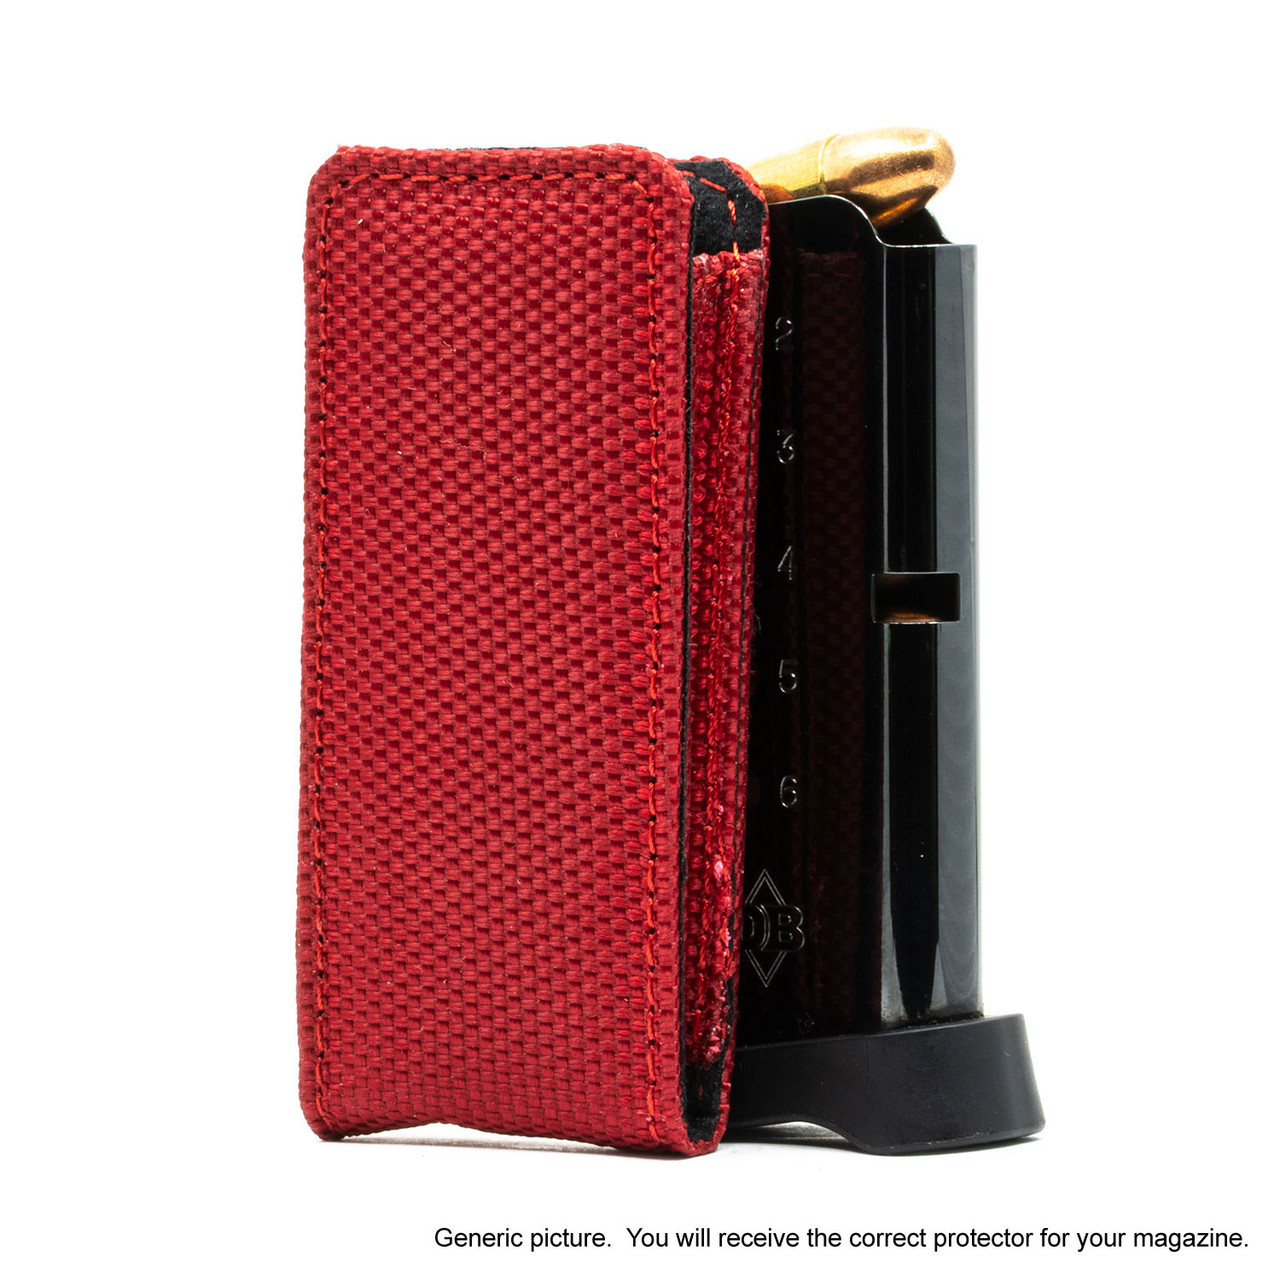 Beretta Pico Red Covert Magazine Pocket Protector